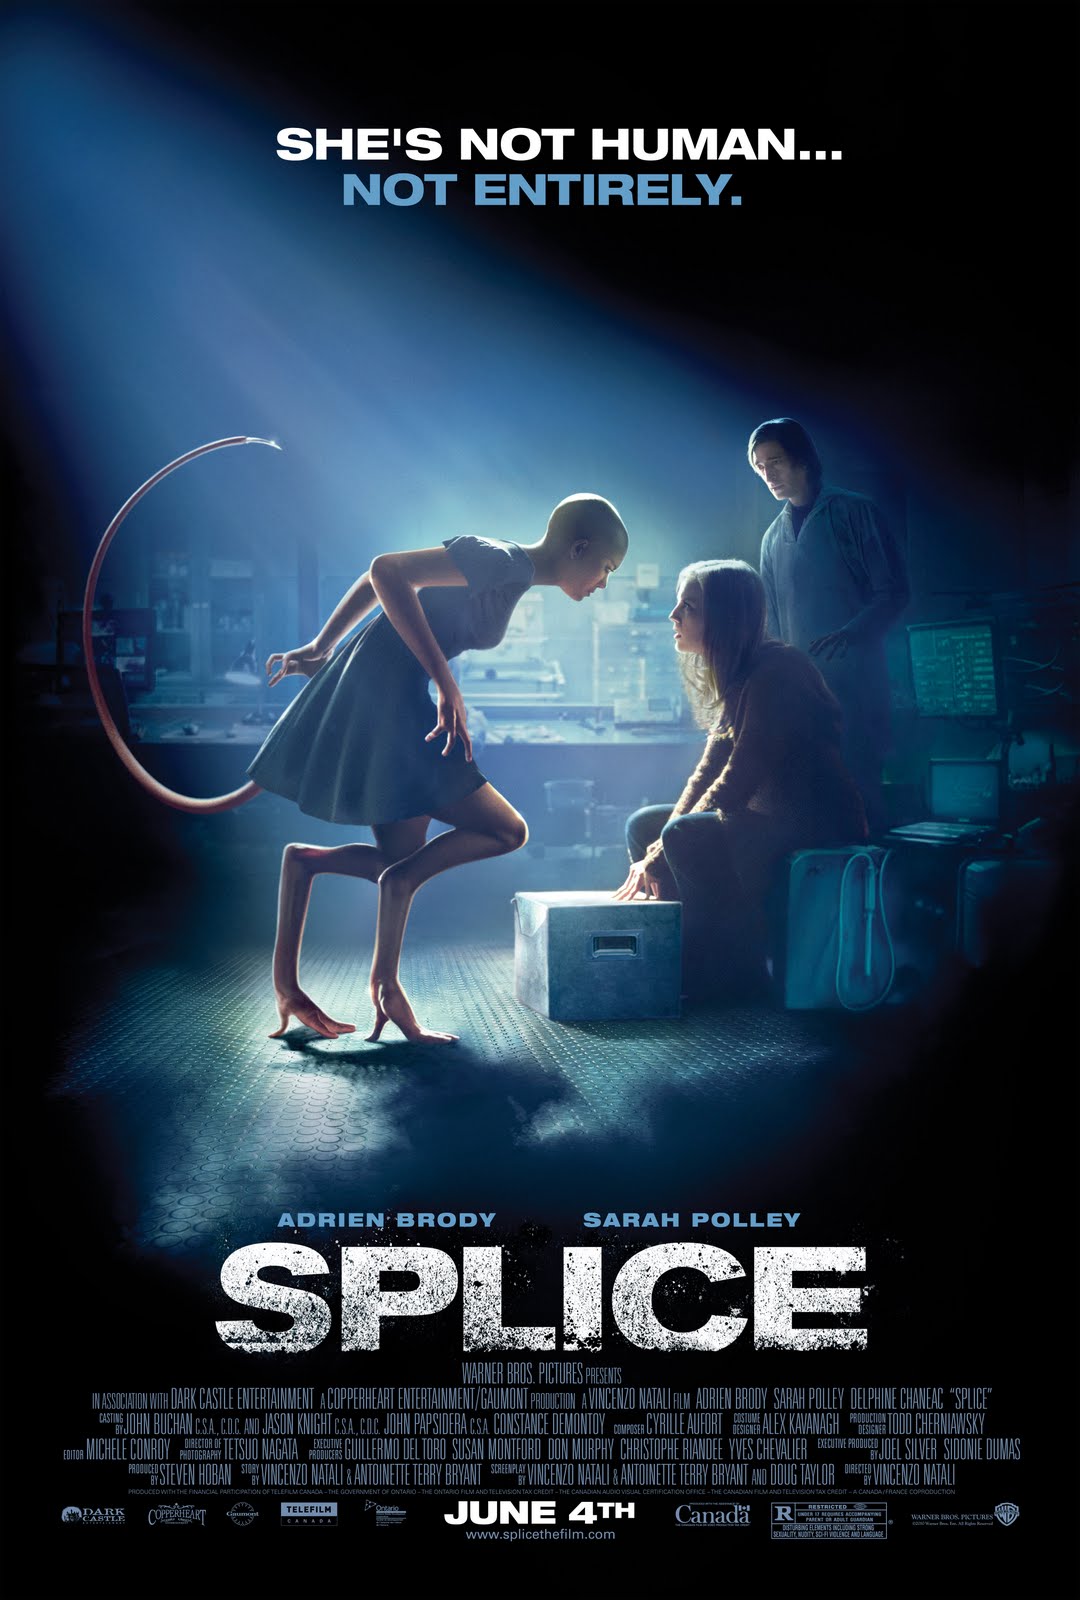 https://blogger.googleusercontent.com/img/b/R29vZ2xl/AVvXsEiynWeLXb11CMAHJfcW6r3jStsMc6DD1tyuhKBpdQuNtp5qLFfWOaIxxlmJtCnPS2aGO0mJK52avKmsOCOluKyceP3rTNGDz02STD4YyOWqvFZ5ZWvgQnJjd5L6g31HN4QsQQBAnxkHmC0/s1600/Splice-movie-poster-2.jpg